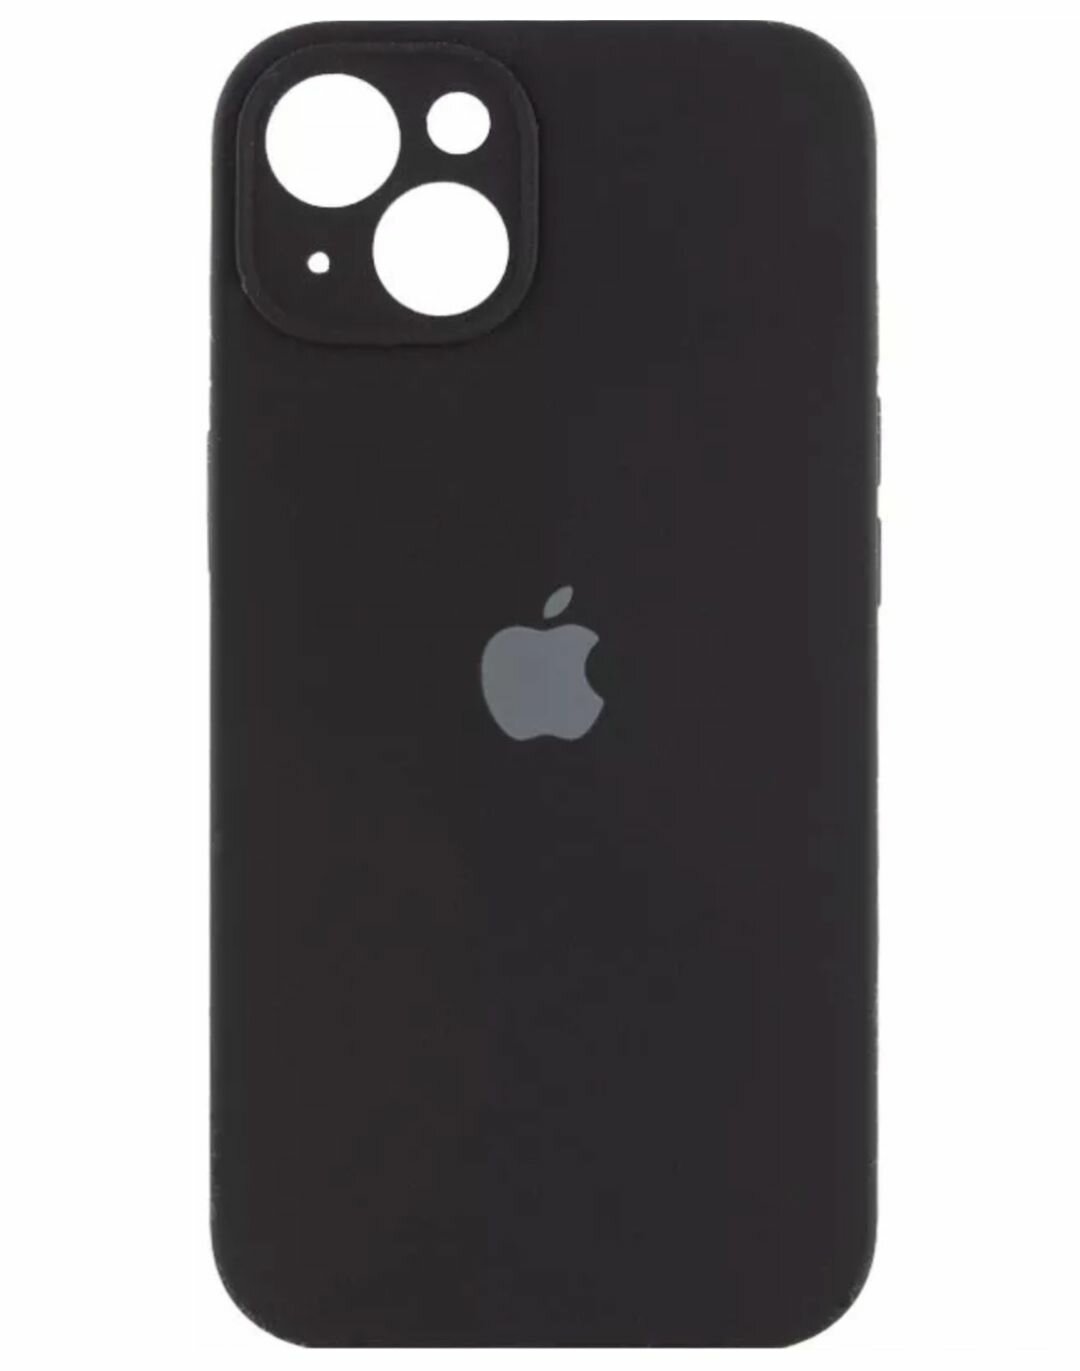 Apple iPhone 14 под оригинальный чёрный чехол, эпл айфон 14 замша, противоударный утолщённый Silicone case